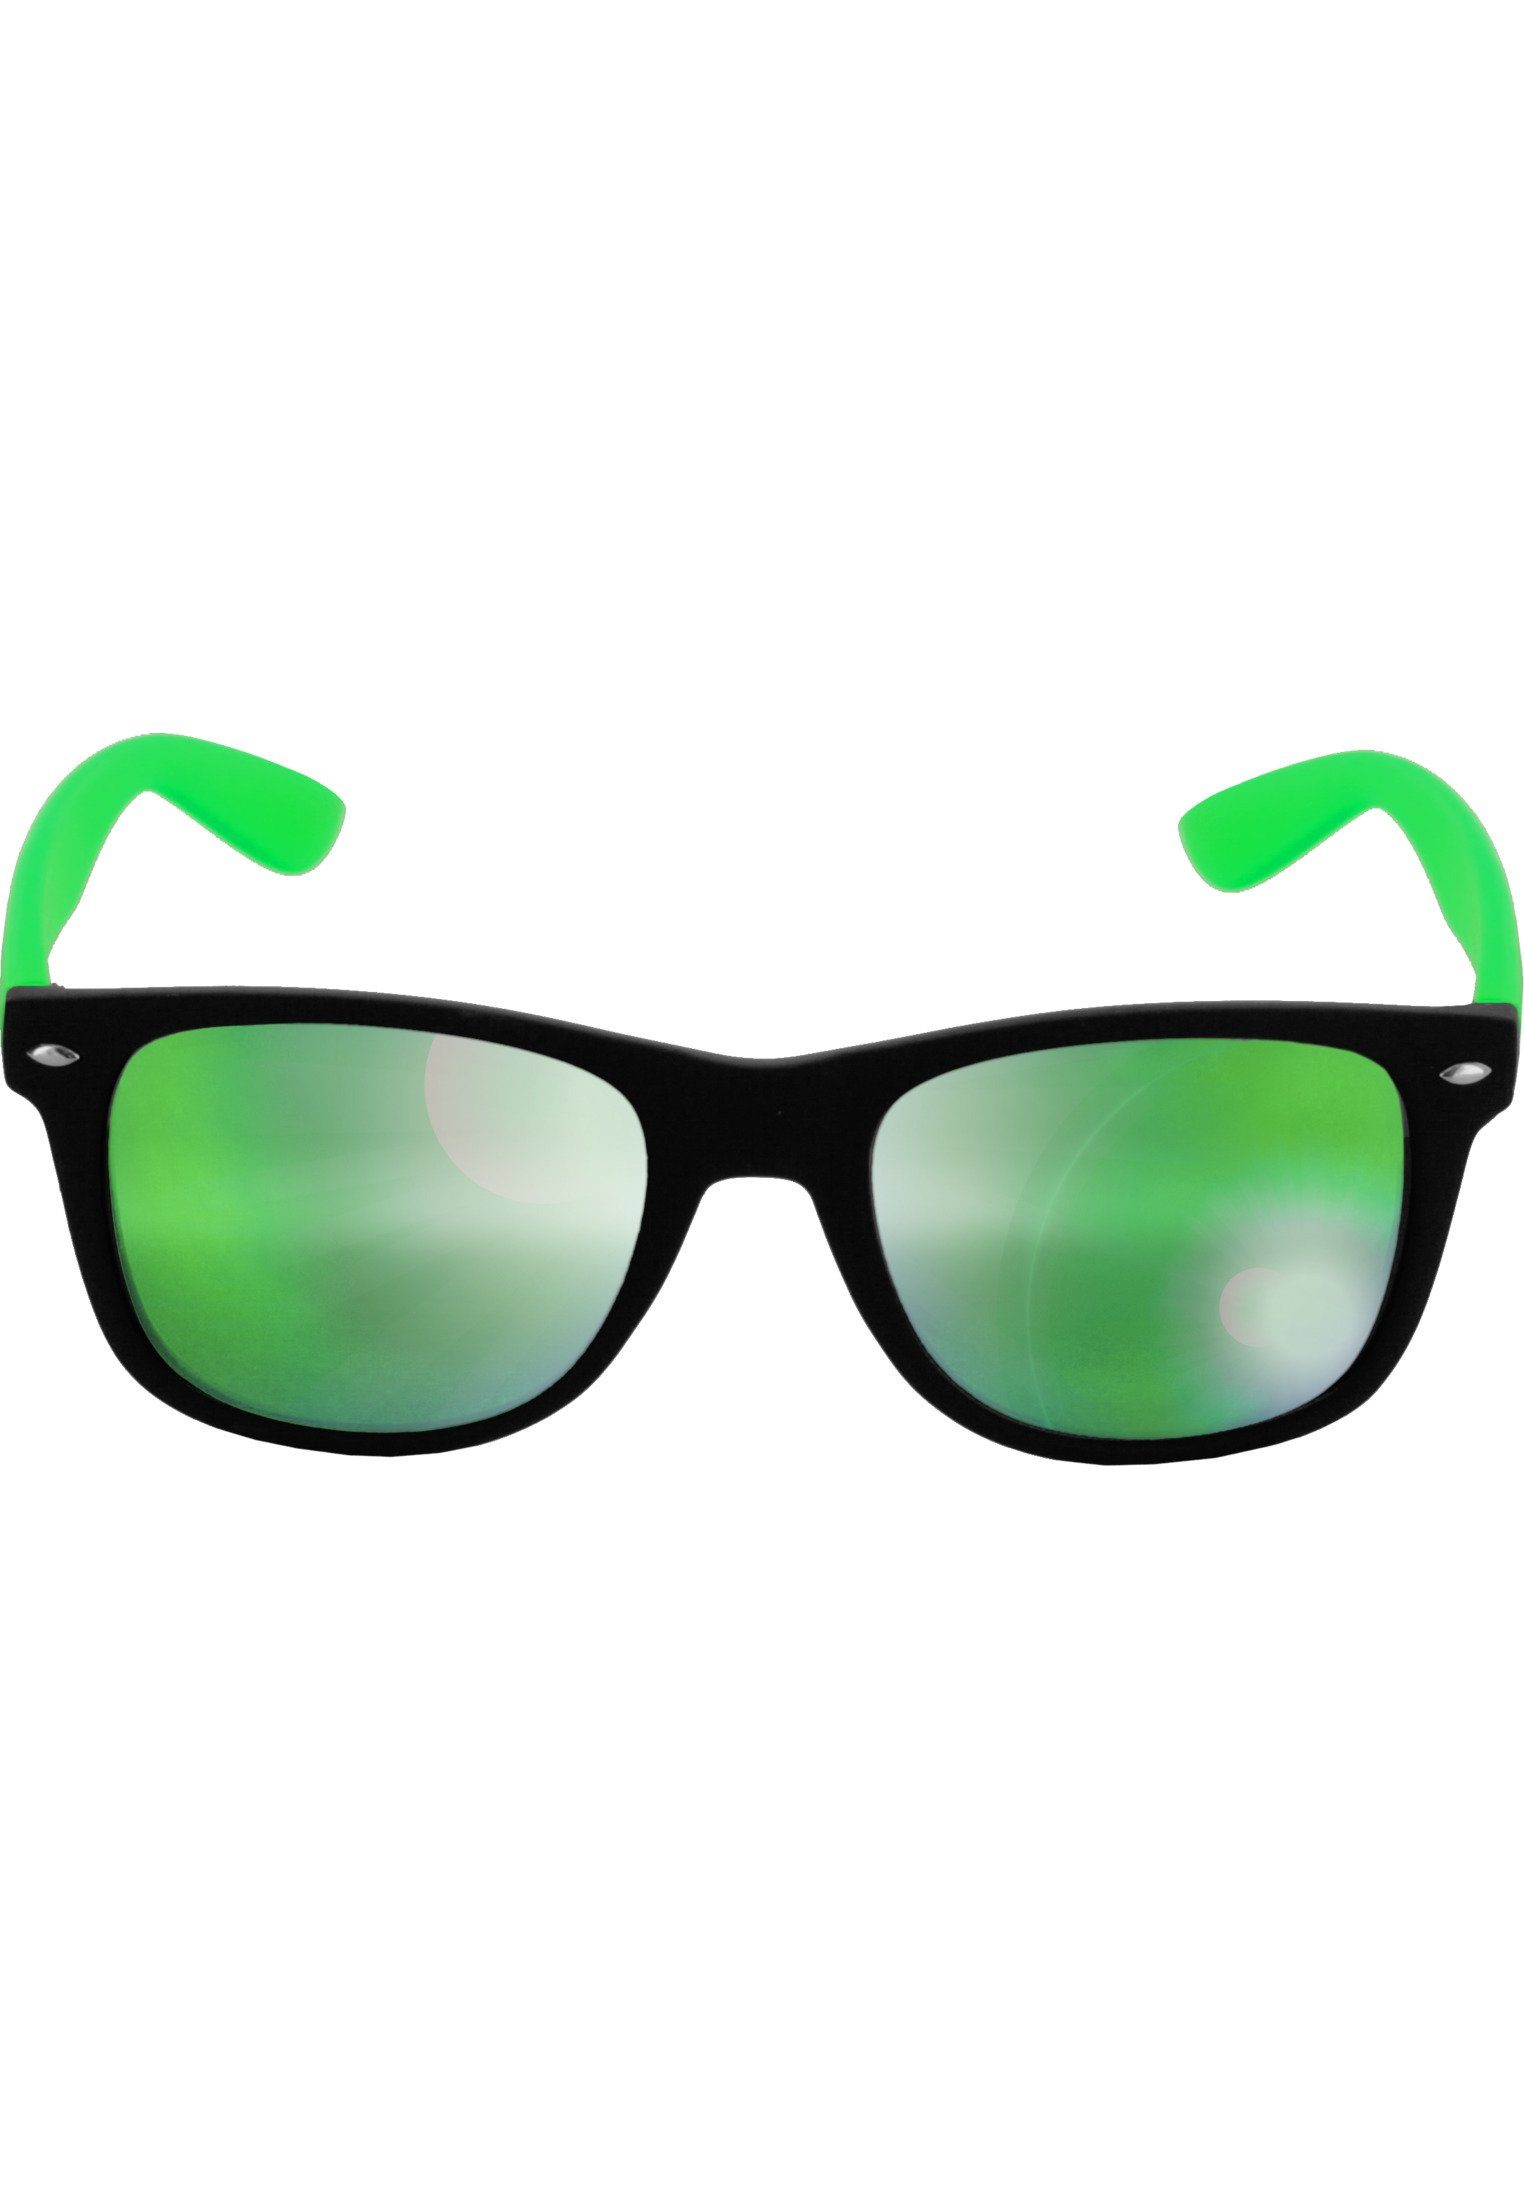 MSTRDS Sonnenbrille Accessoires Likoma Mirror Sunglasses blk/lgr